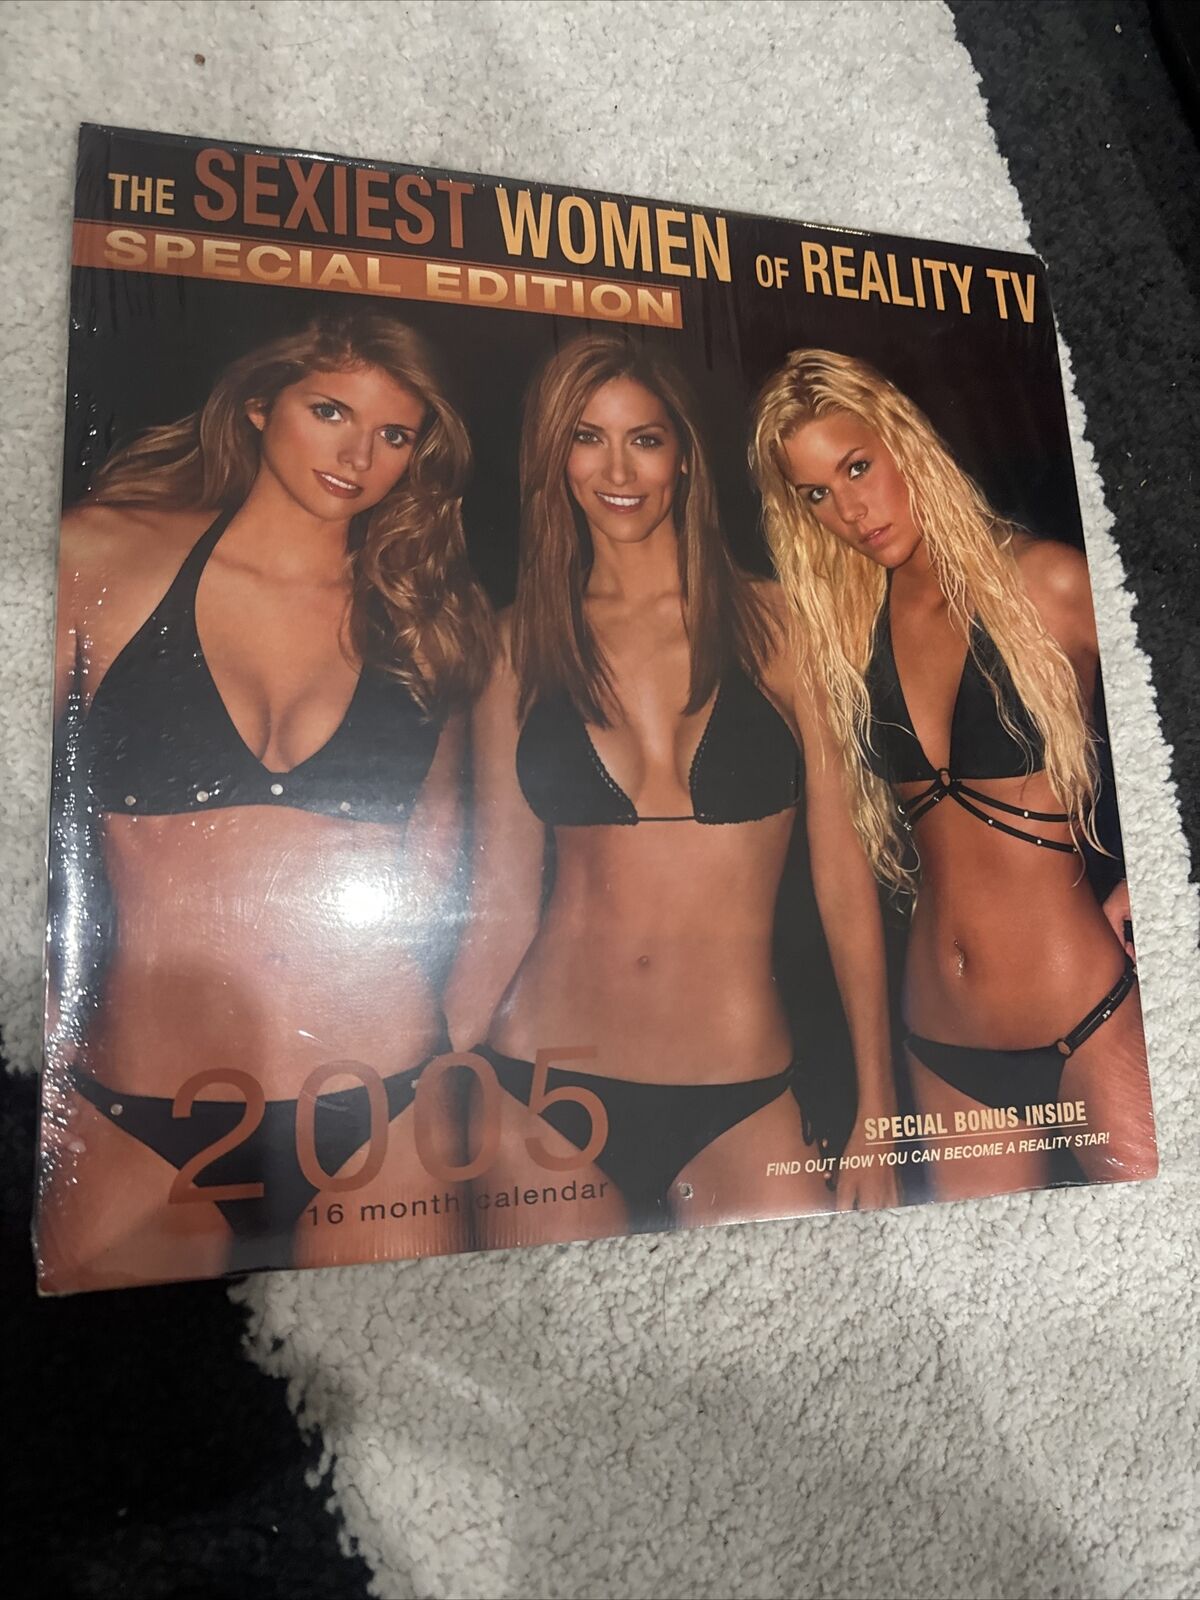 The Sexiest Women of Reality TV 2005 calendar